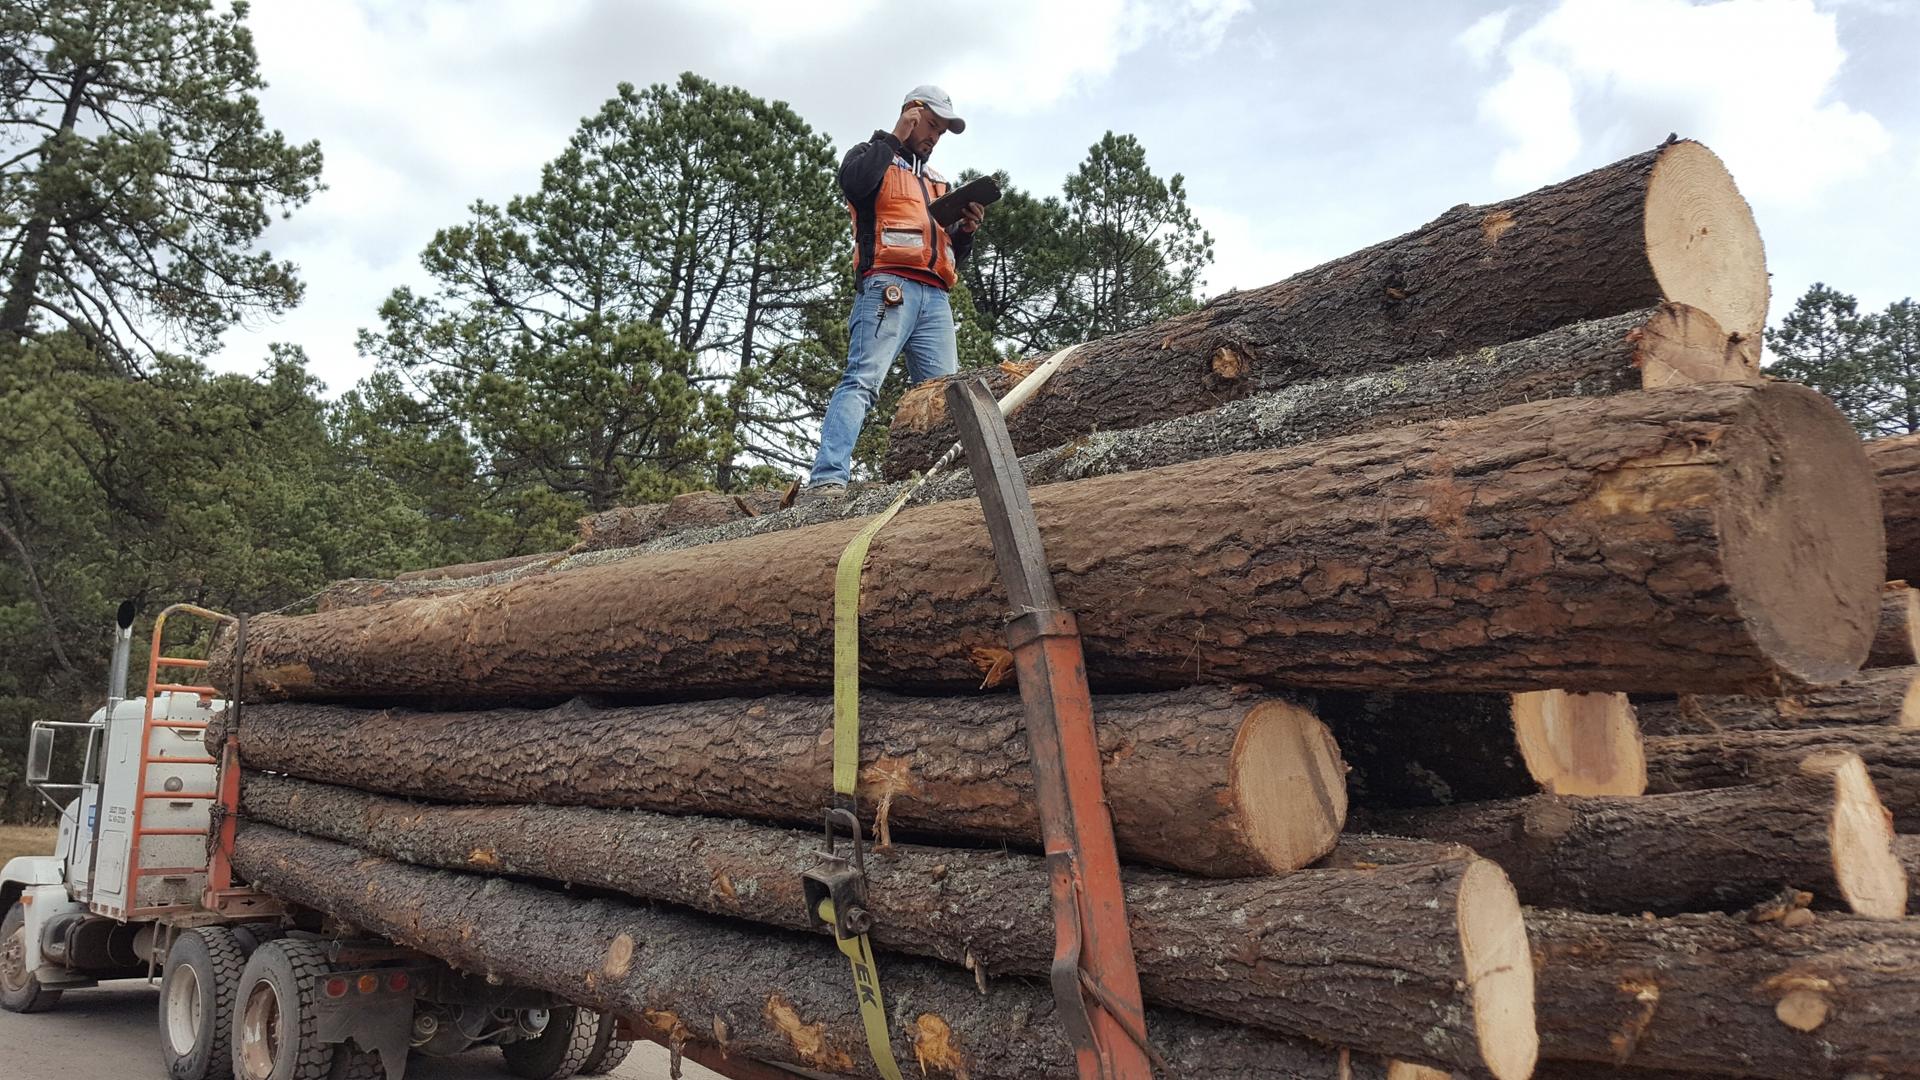 Logs loaded onto a truck